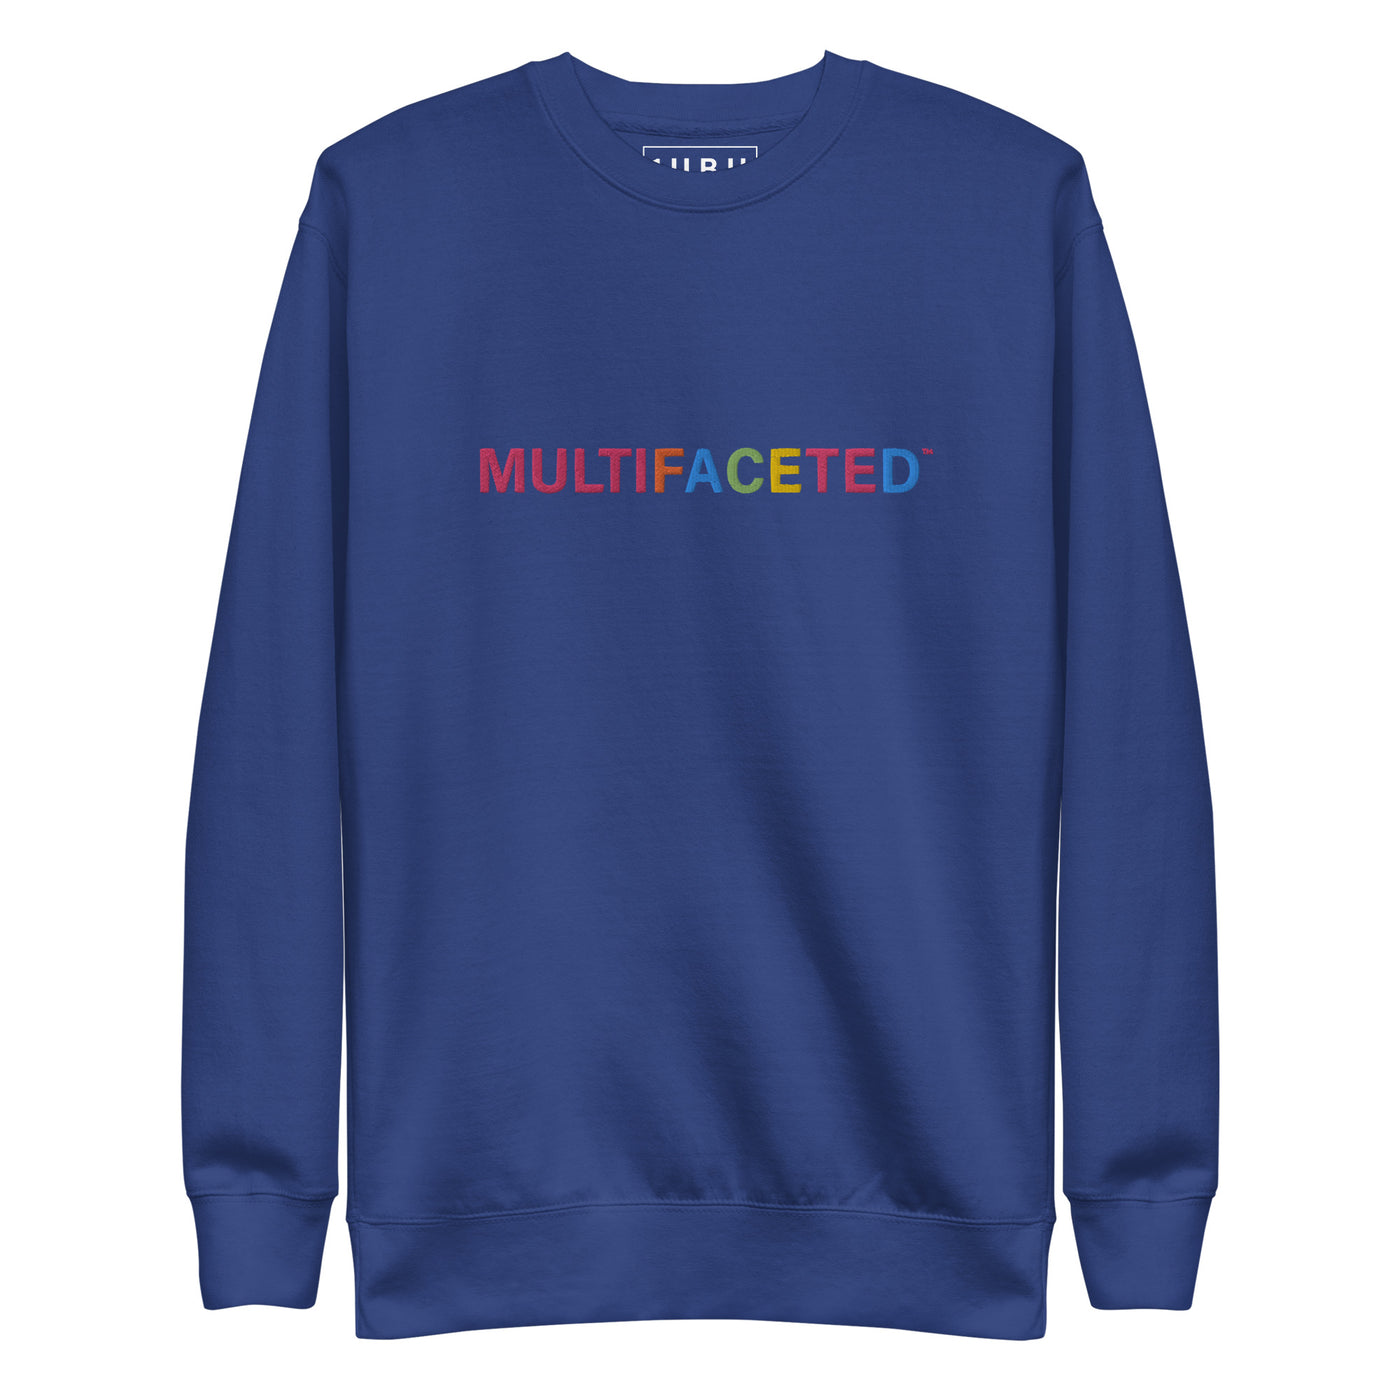 Embroidered crewneck Sweatshirt - Multifaceted